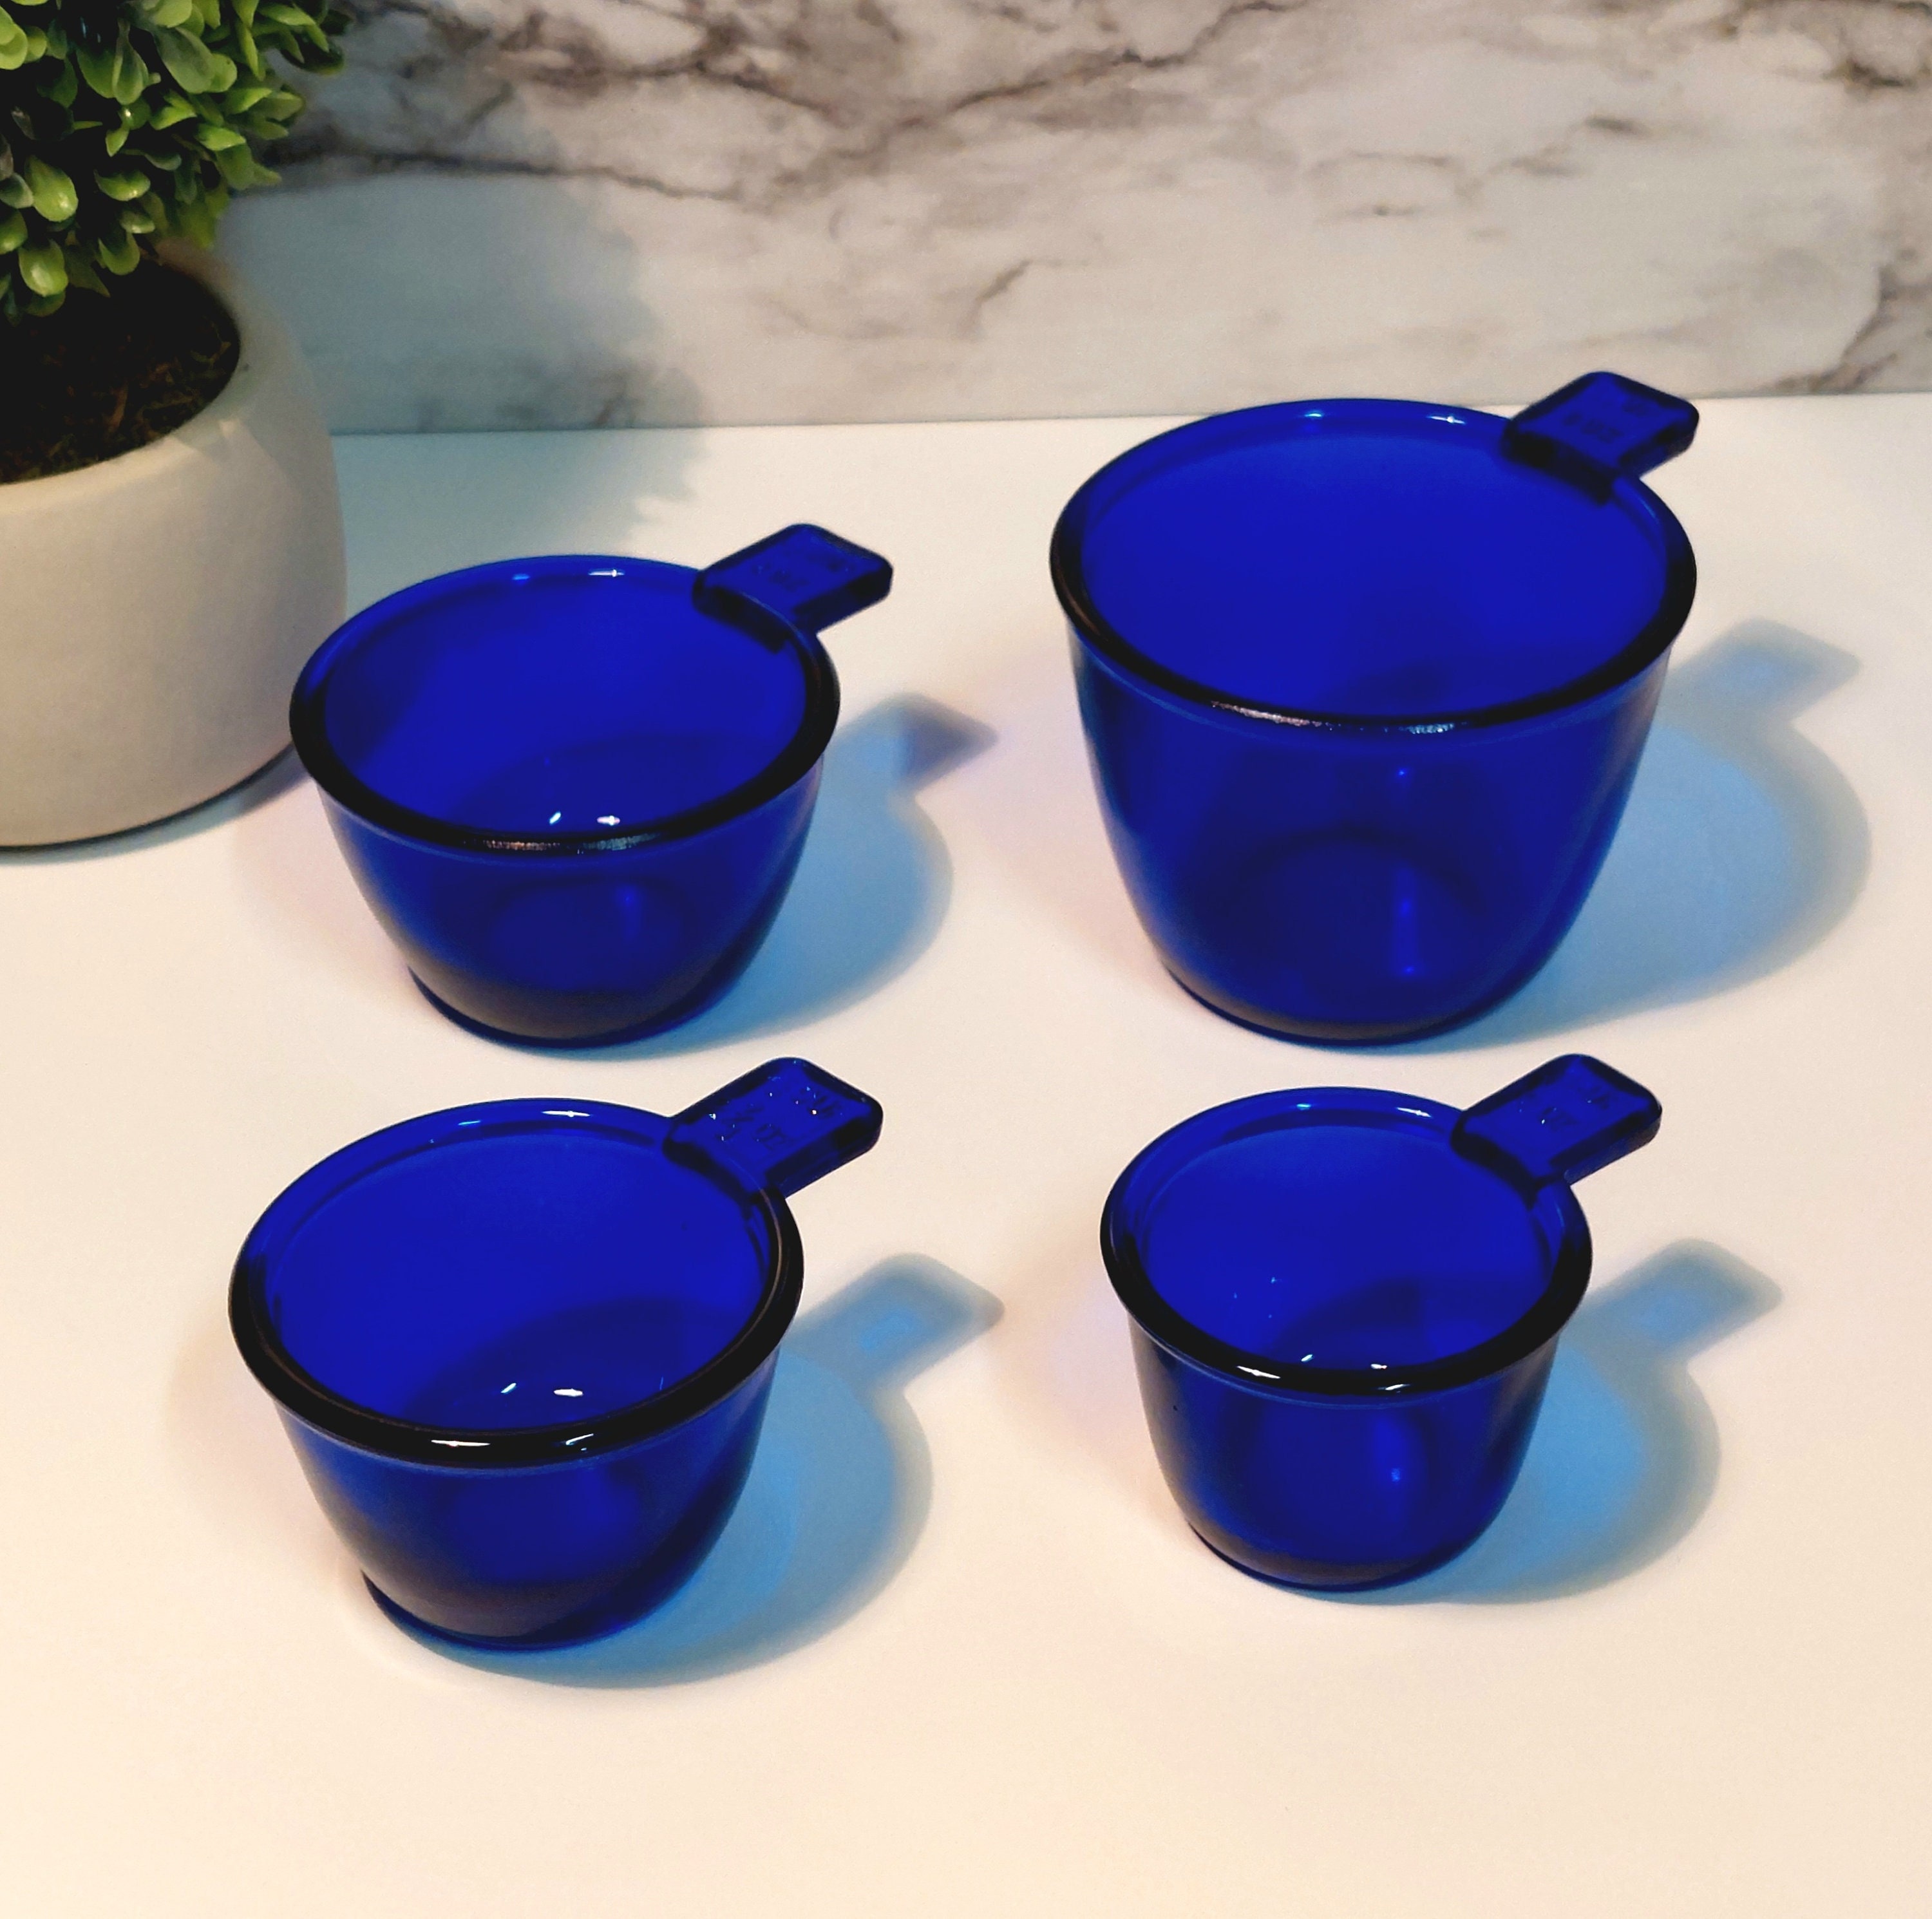 Buy Pyrex Measuring Bowl 4.2 Liter Online - Shop Home & Garden on